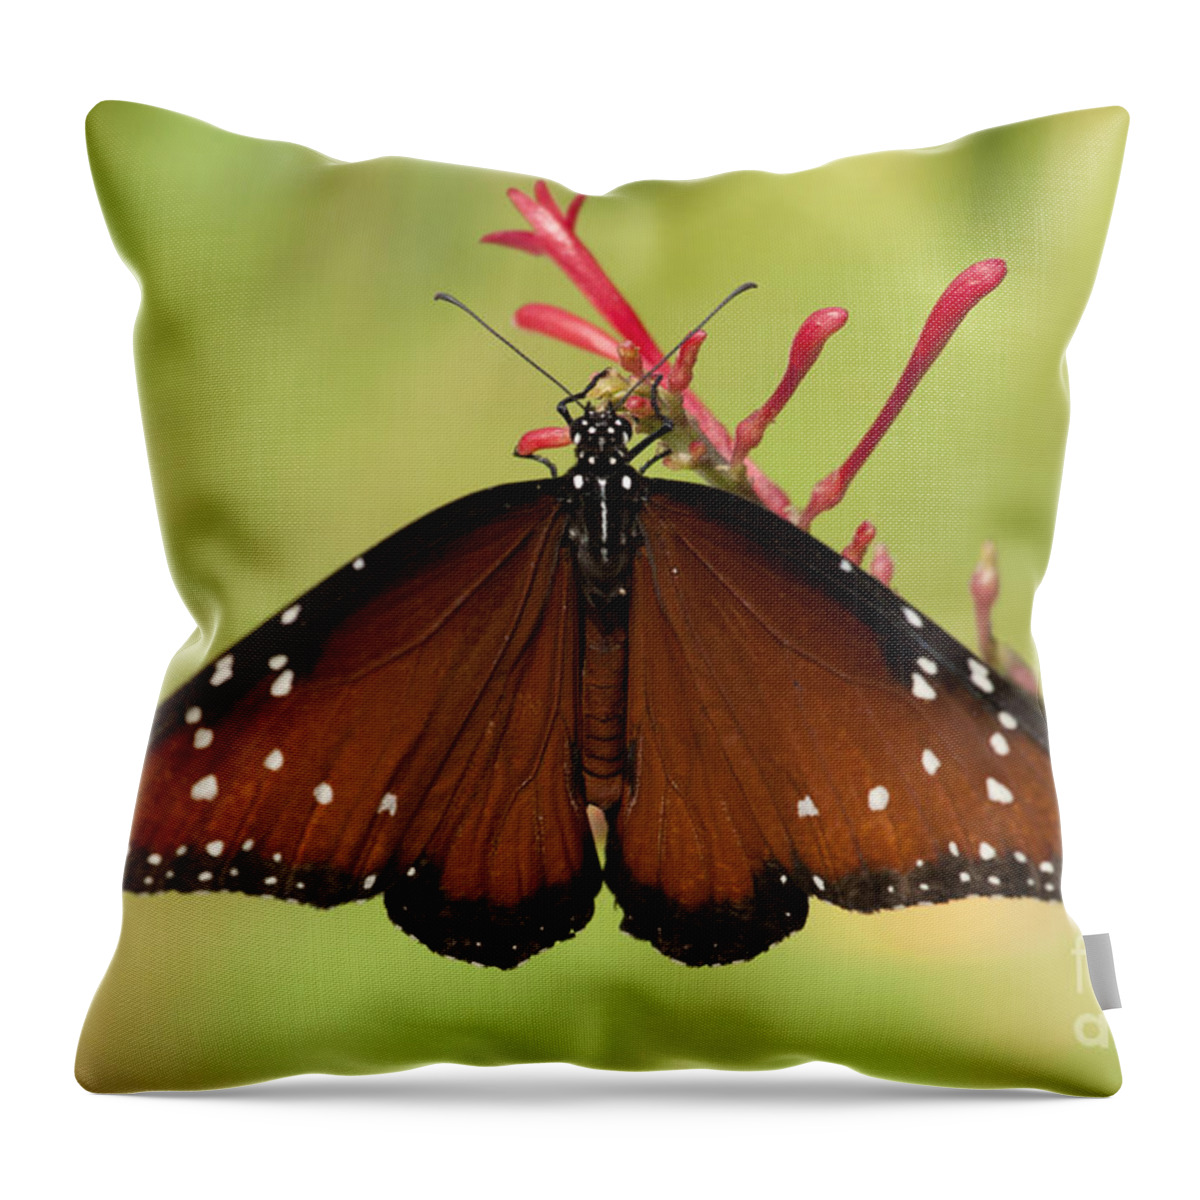 Queen Butterfly Throw Pillow featuring the photograph Queen Butterfly by Meg Rousher